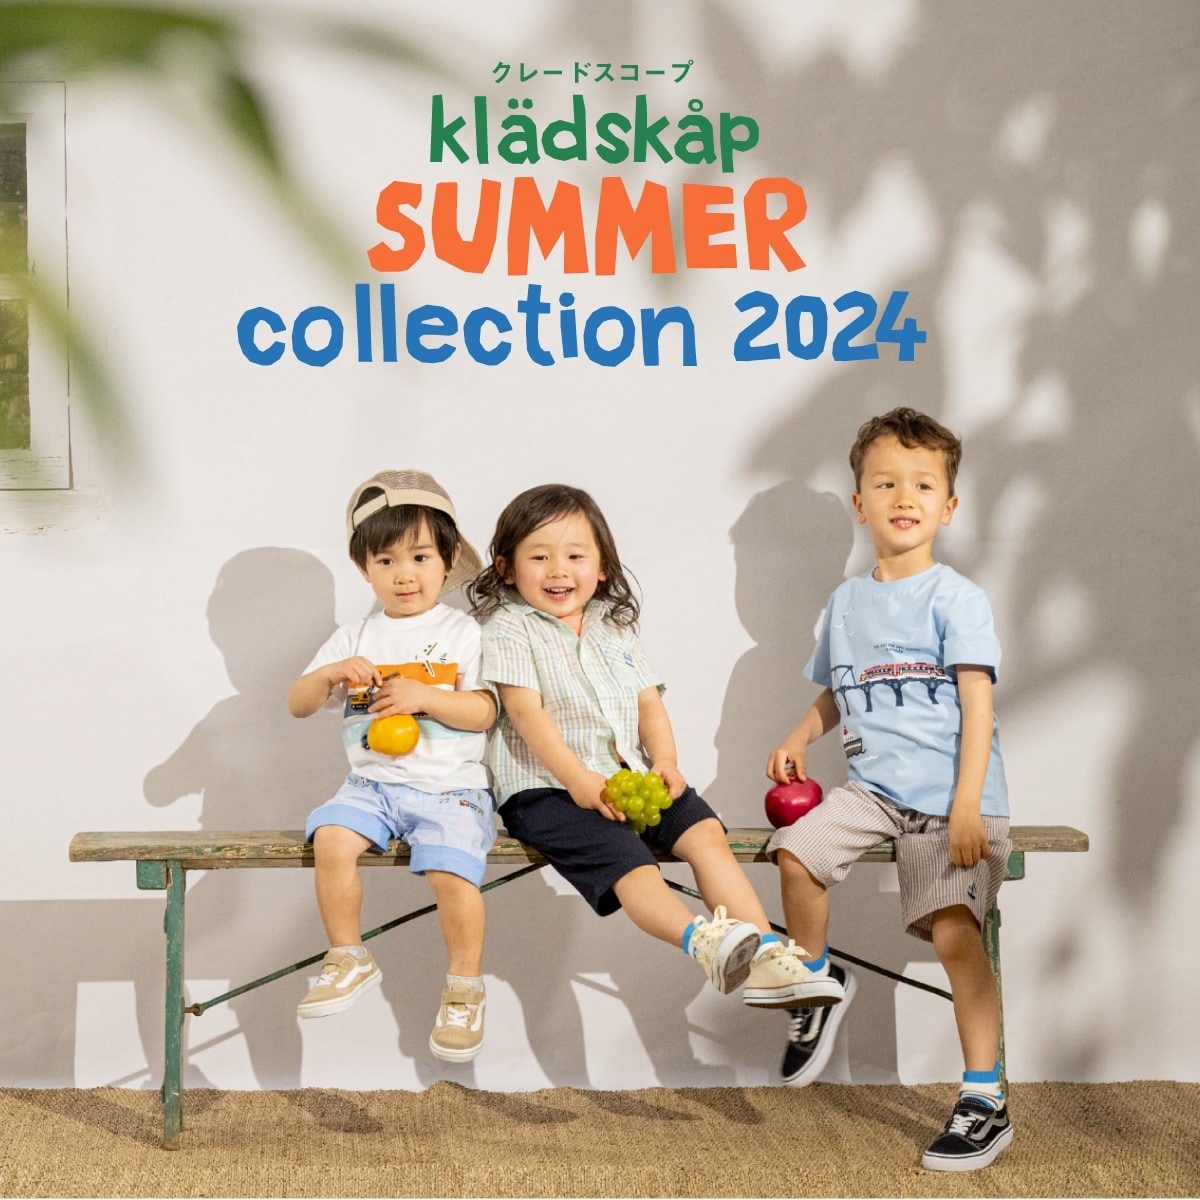 kladskapの最新夏コレクションをWEB CATALOGからcheck！